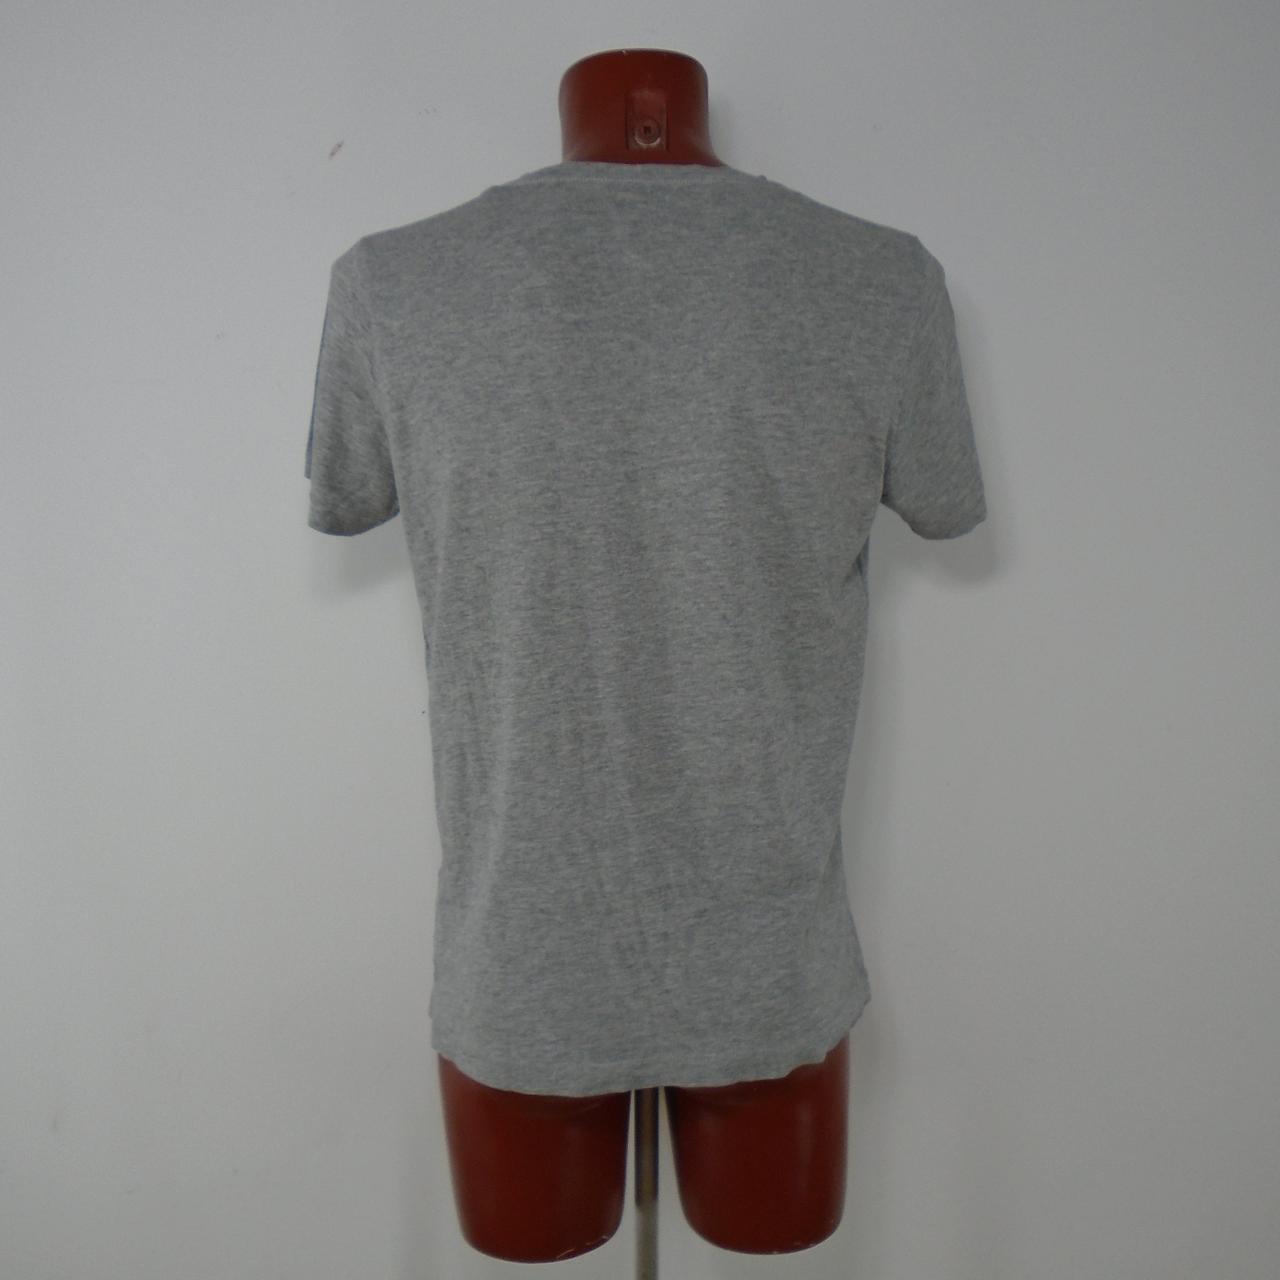 Men's T-Shirt Tom Tailor. Grey. L. Used. Very good